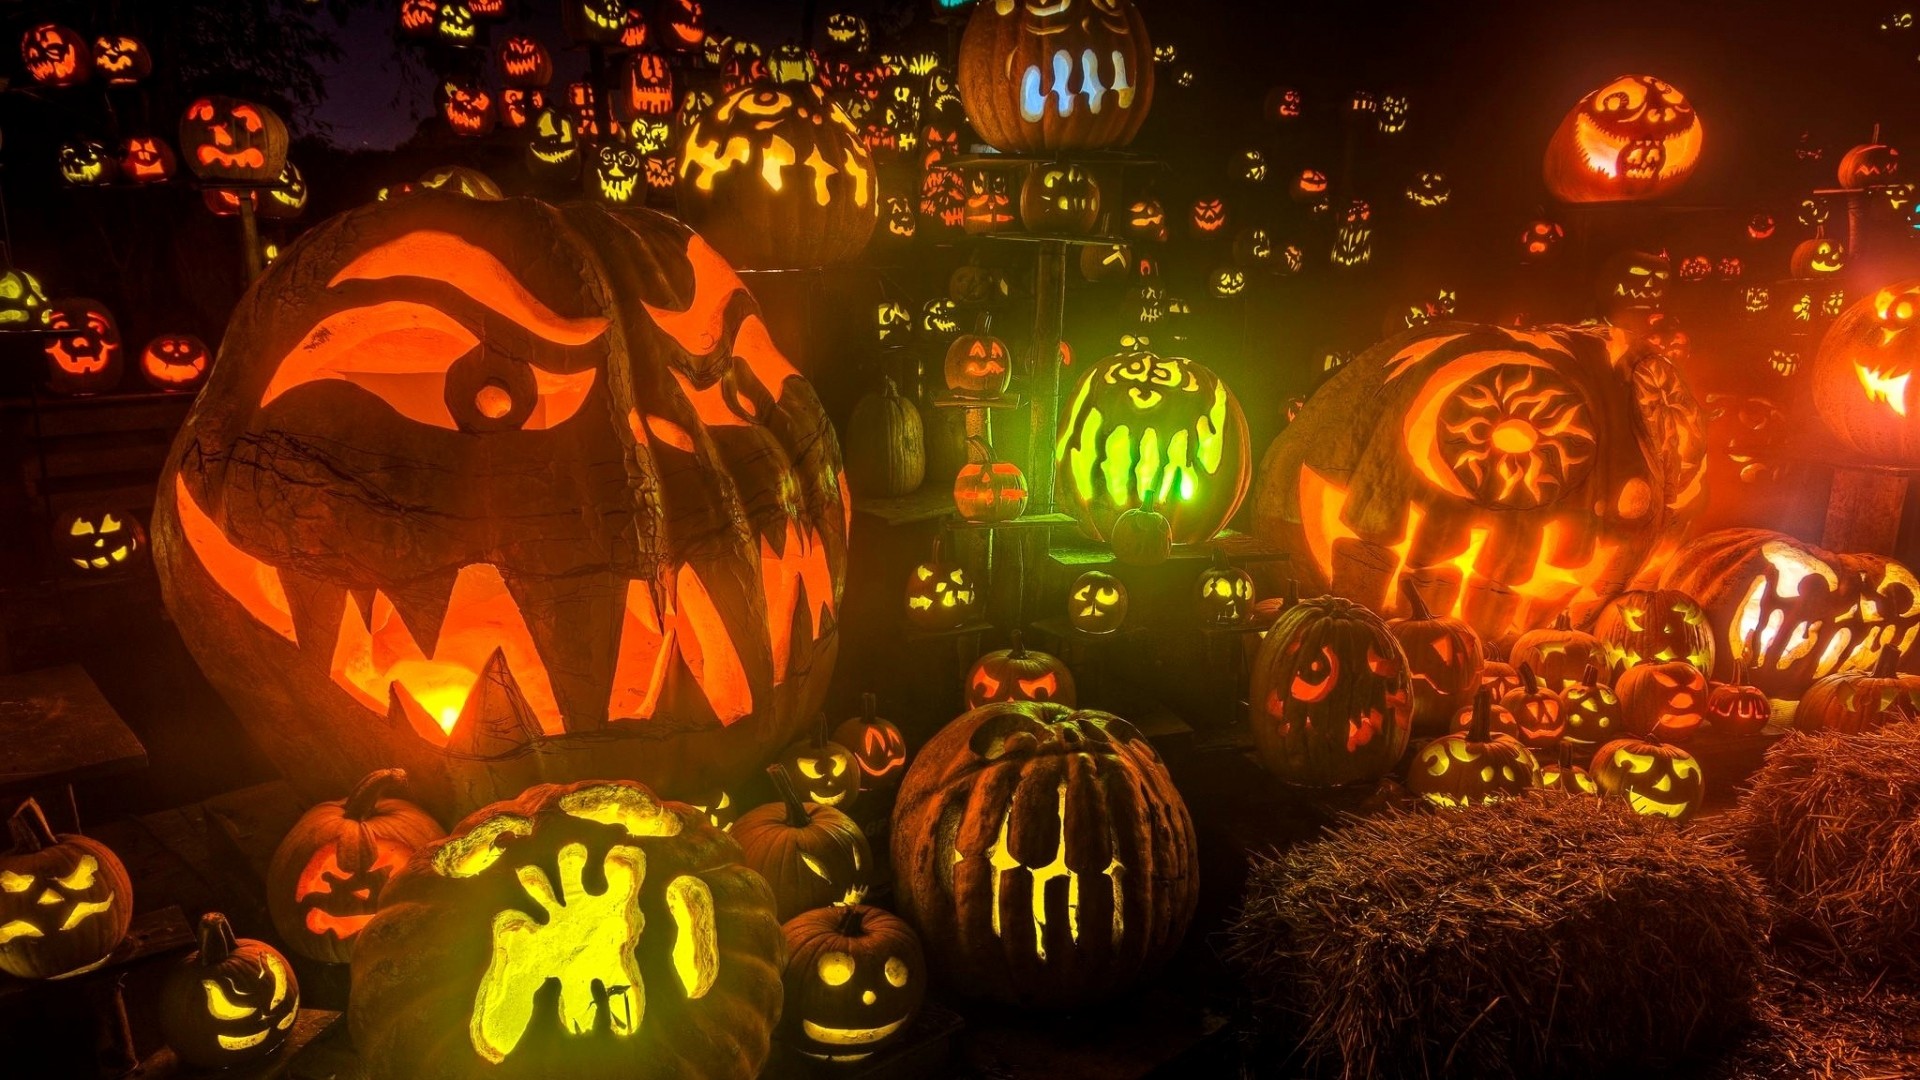 1920x1080 ... Halloween Pumpkin Backgrounds Inspirational Download Hd Wallpaper  Halloween Scary Room Jack O ...